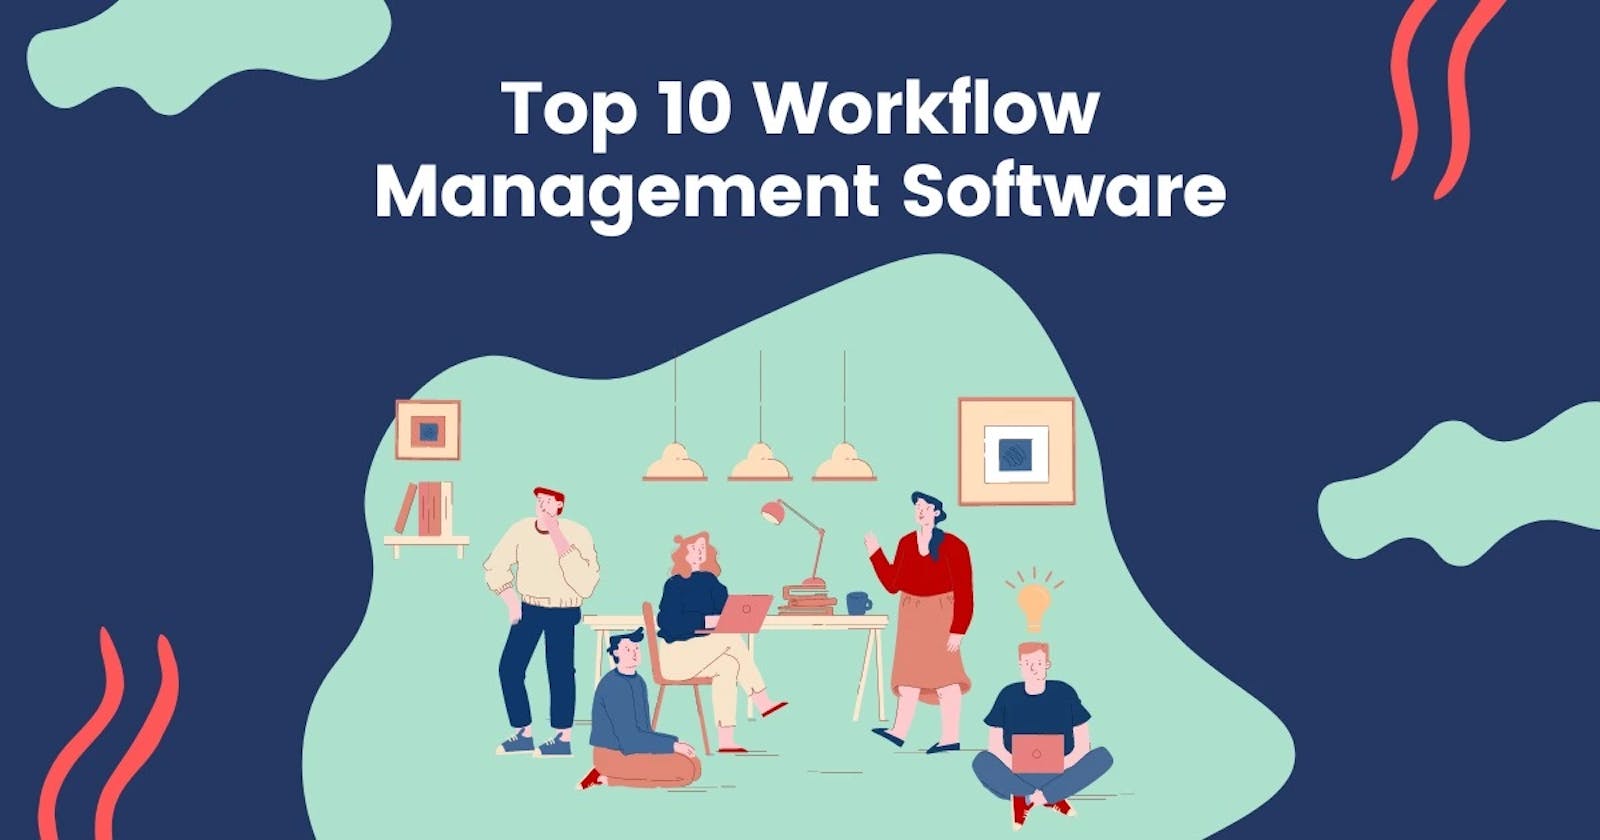 Top 10 workflow management software